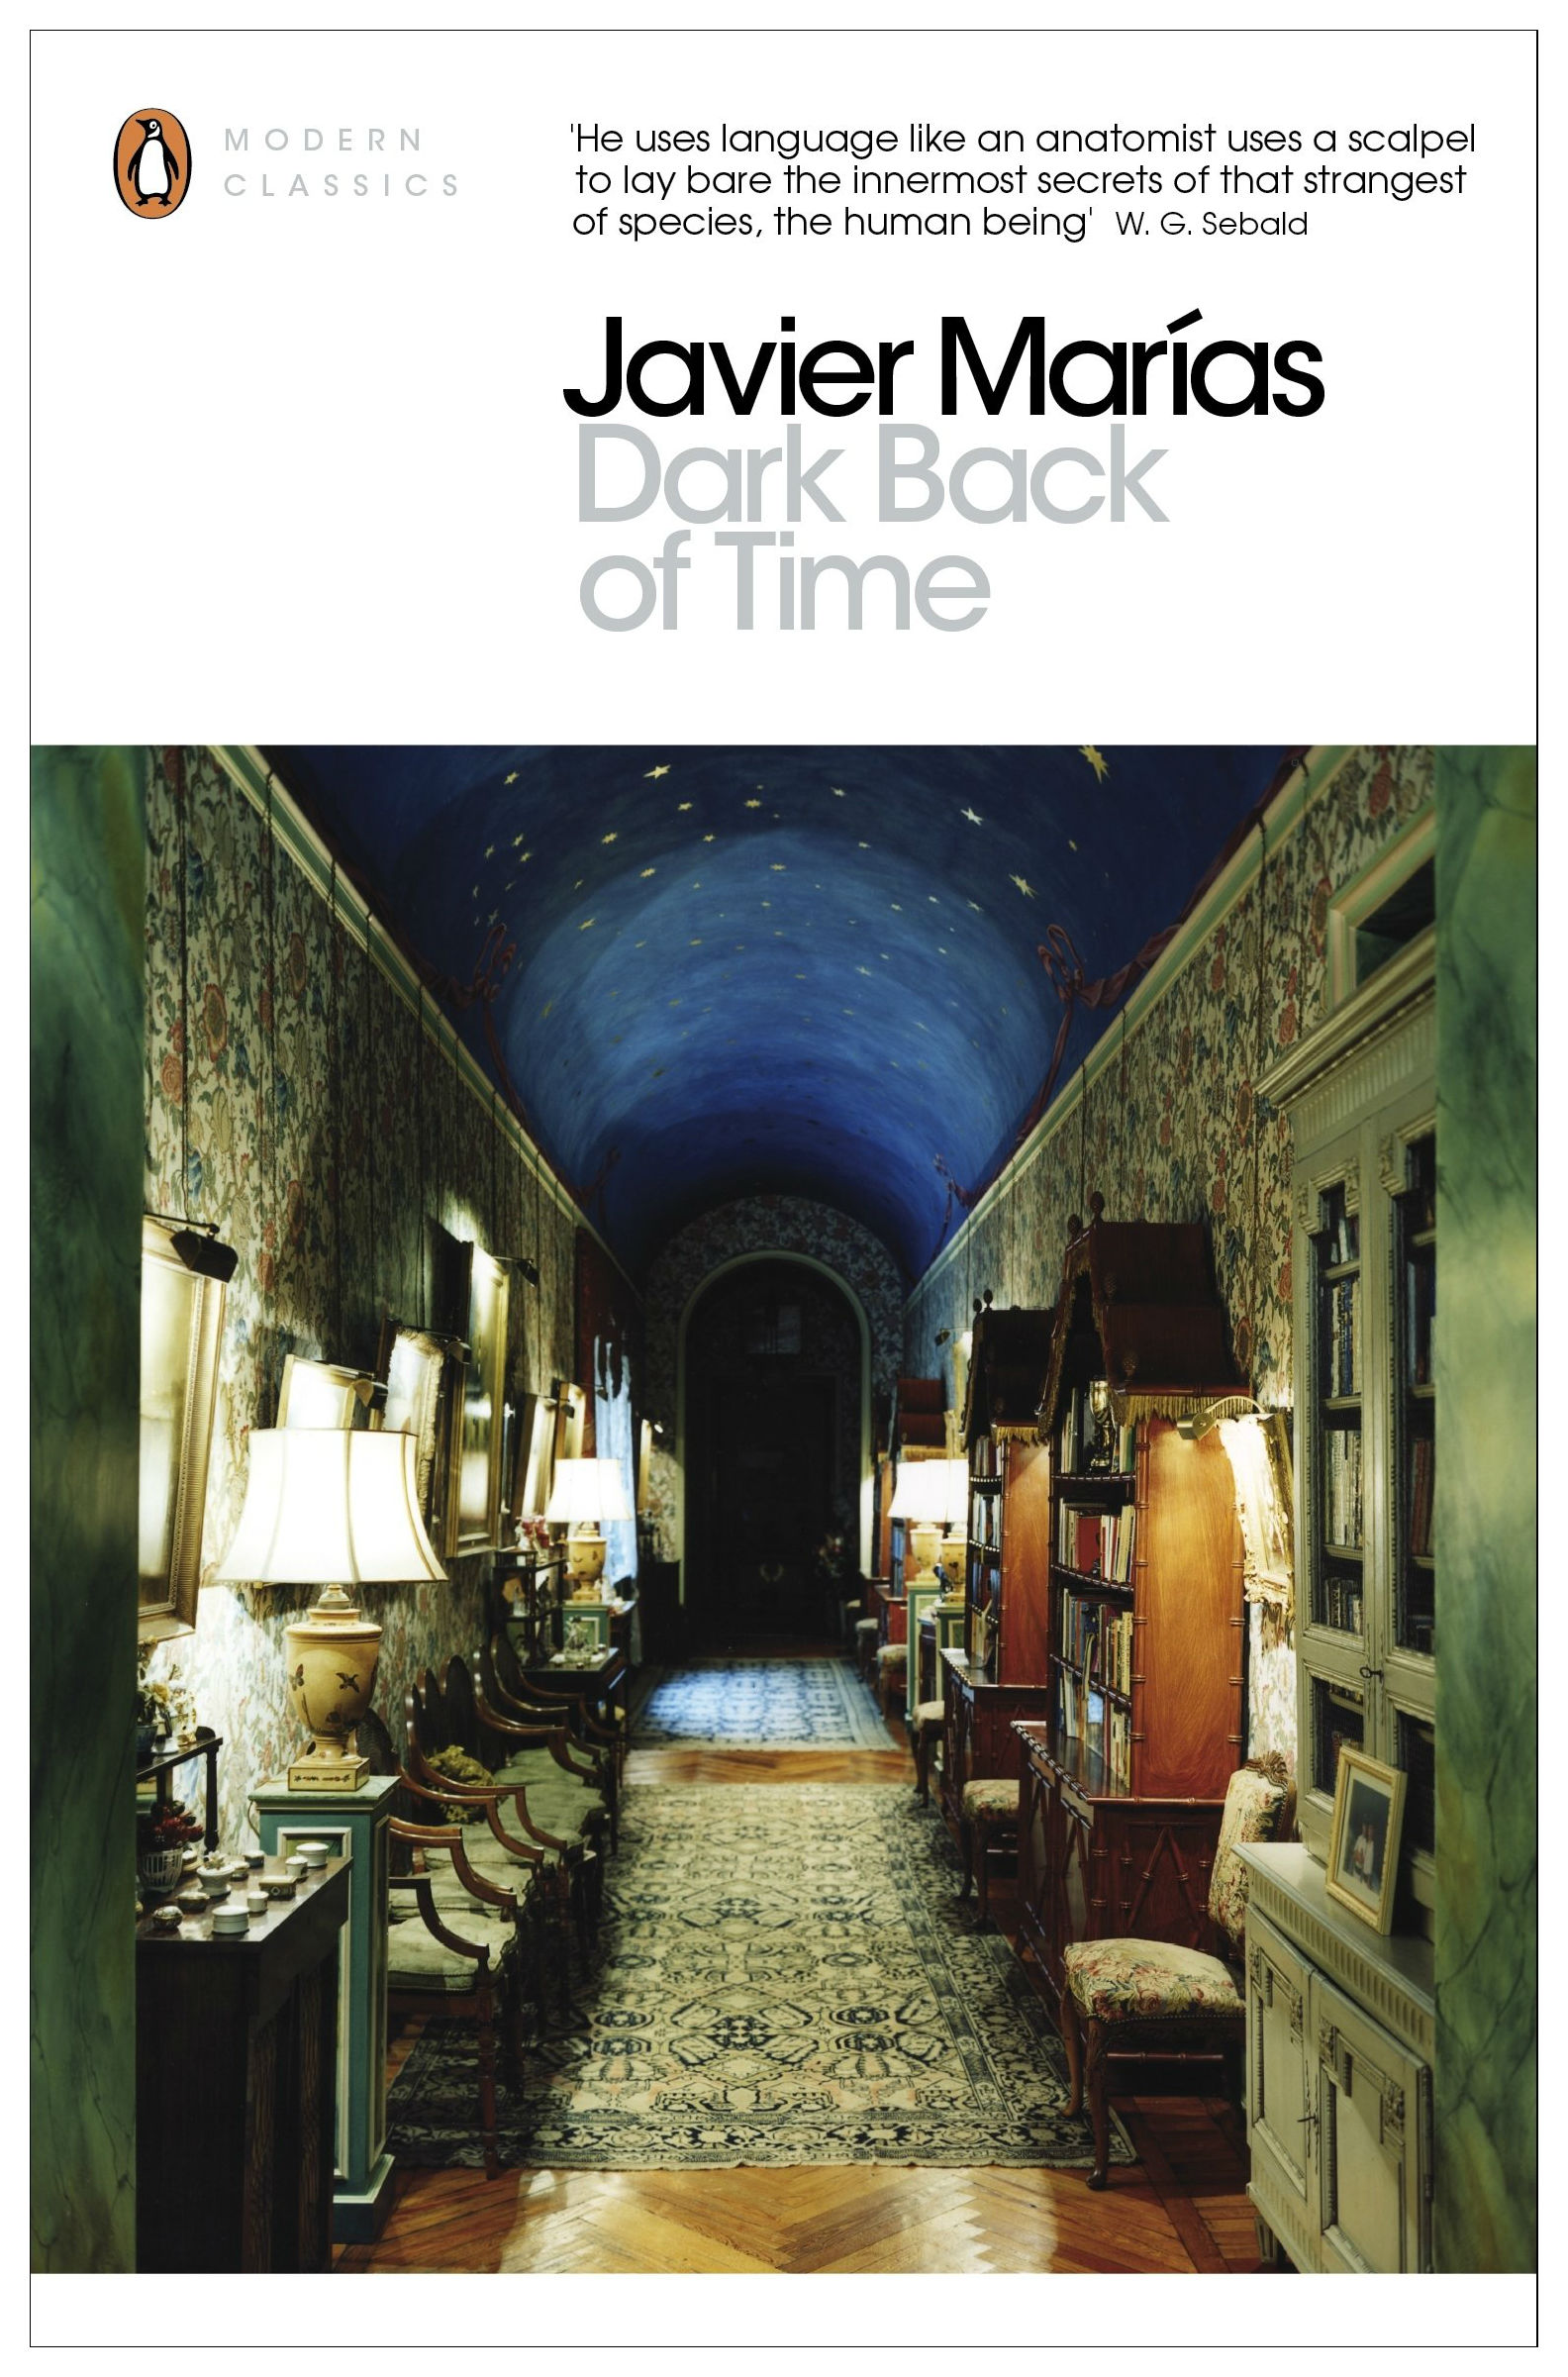 фото Книга penguin group javier marias "dark back of time"